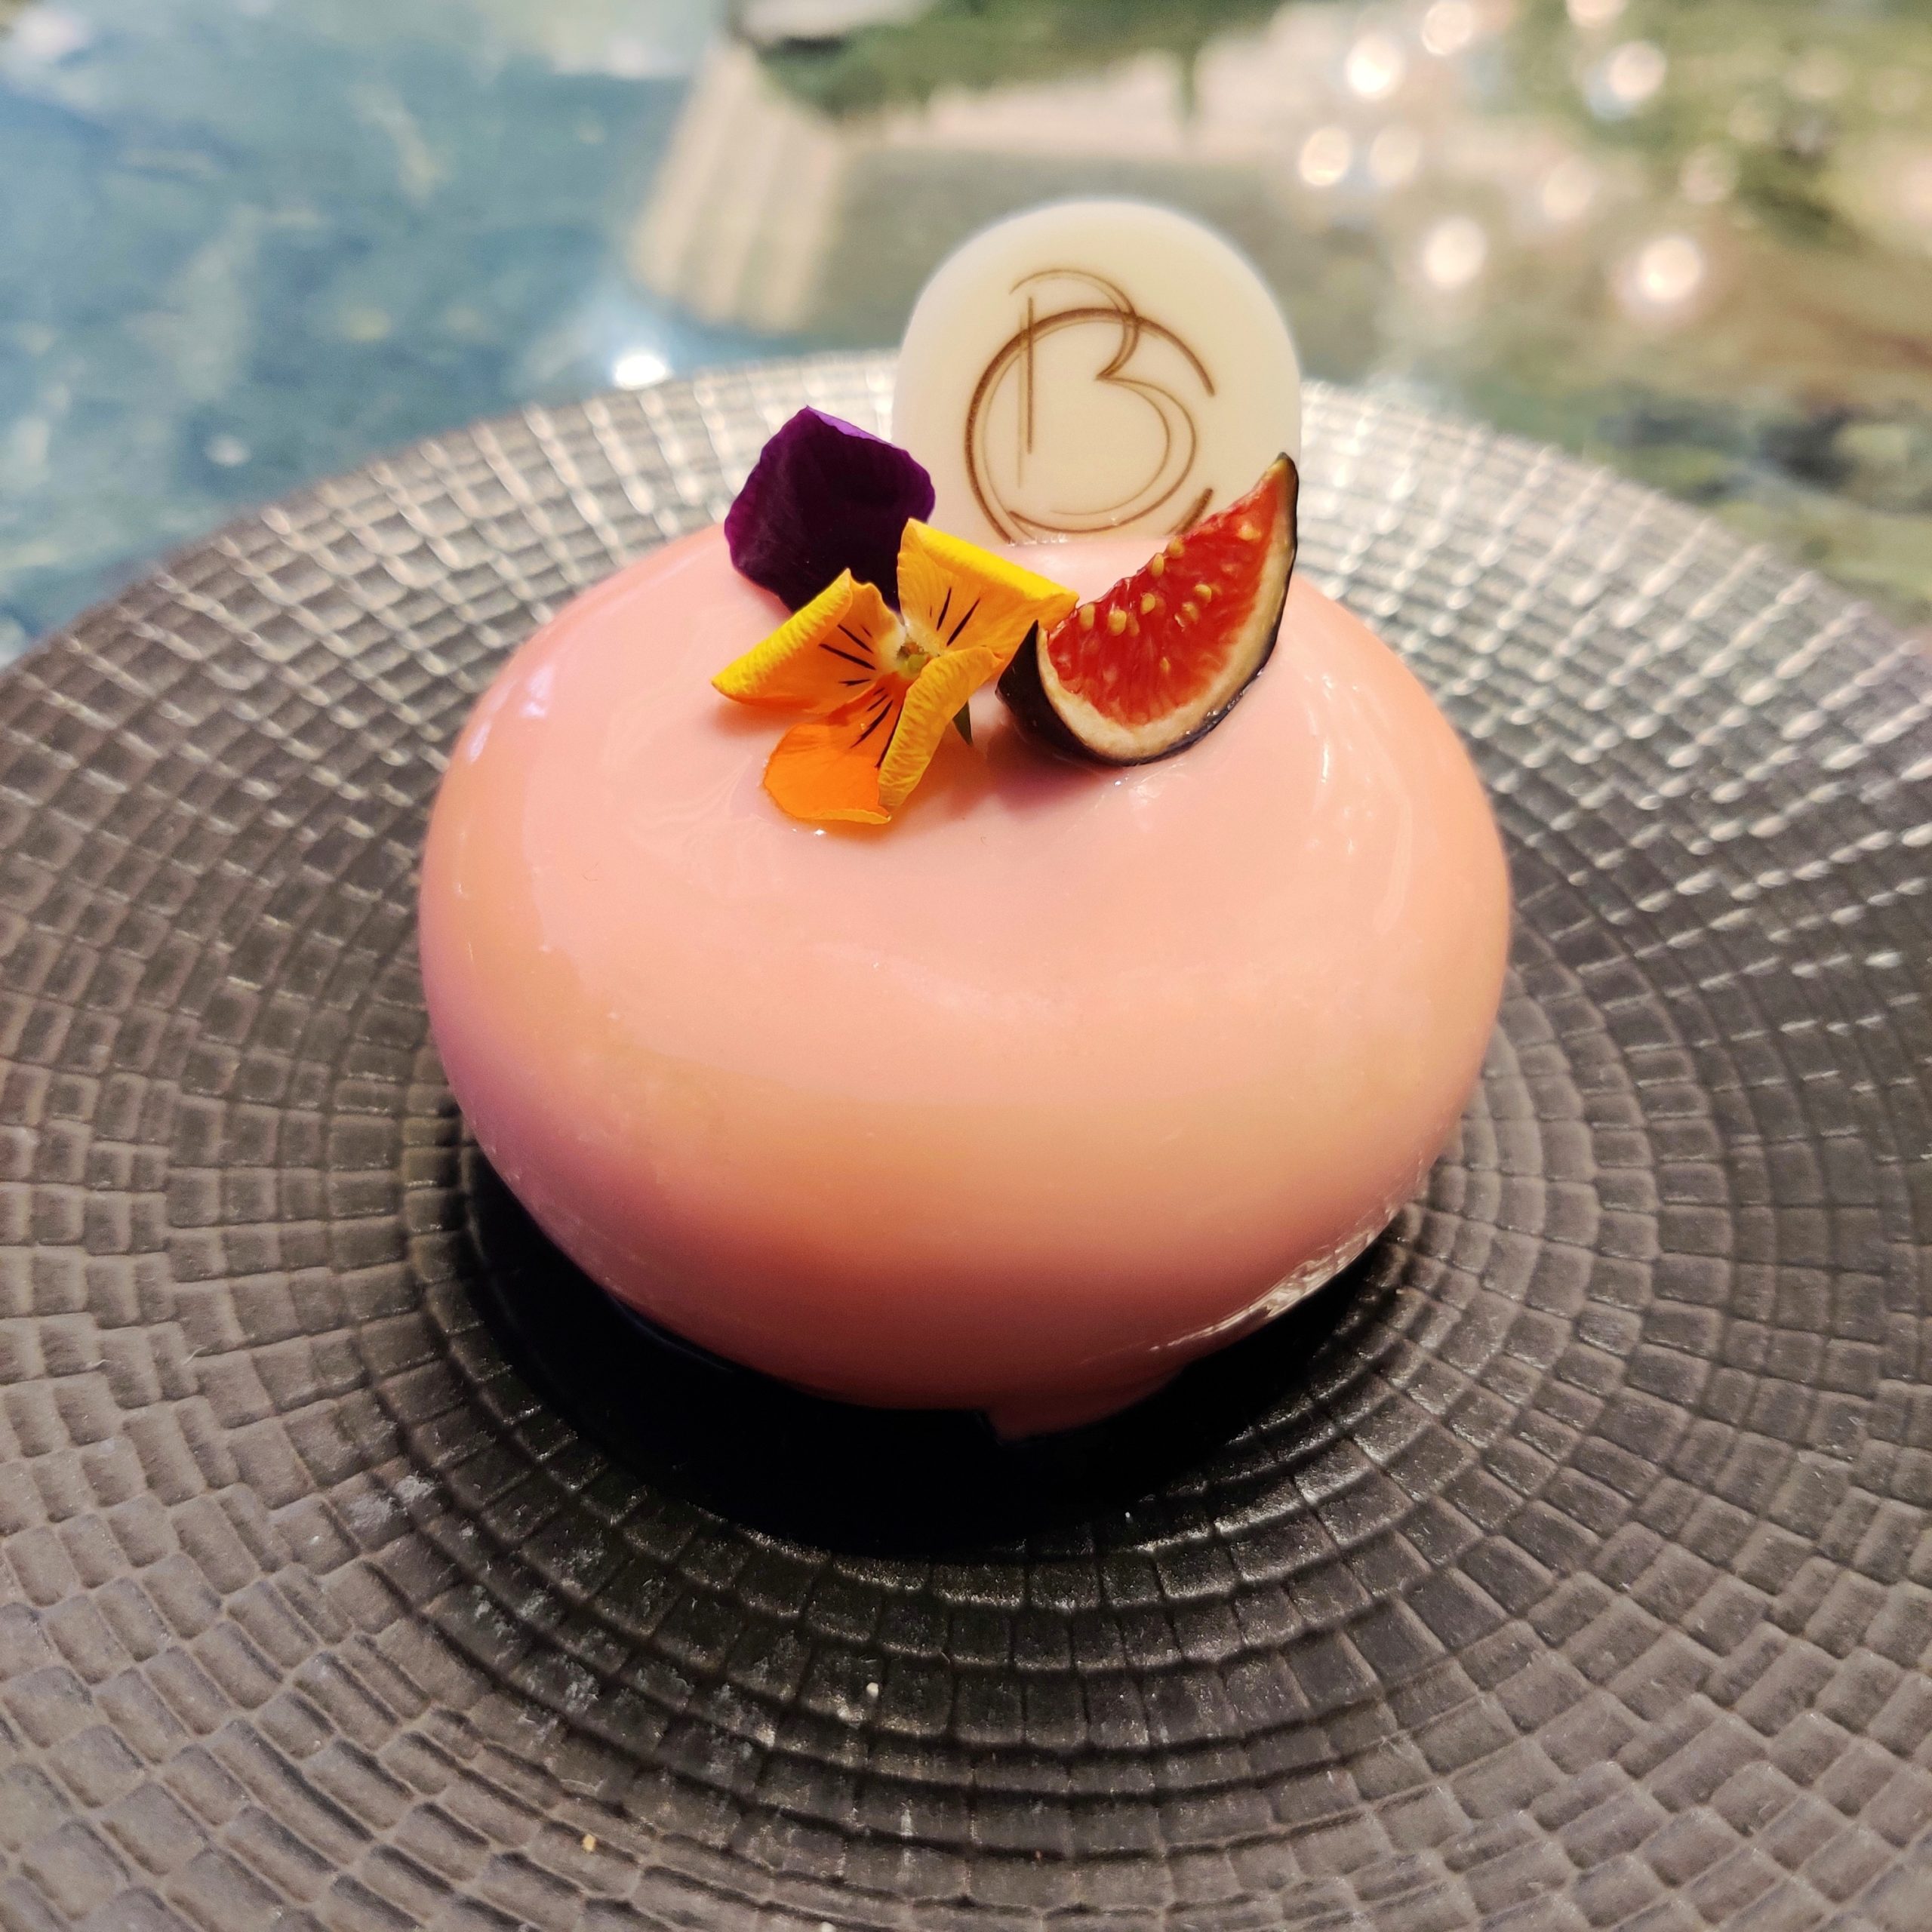 Dôme Violette Figue, dessert du restaurant Pullman Bercy